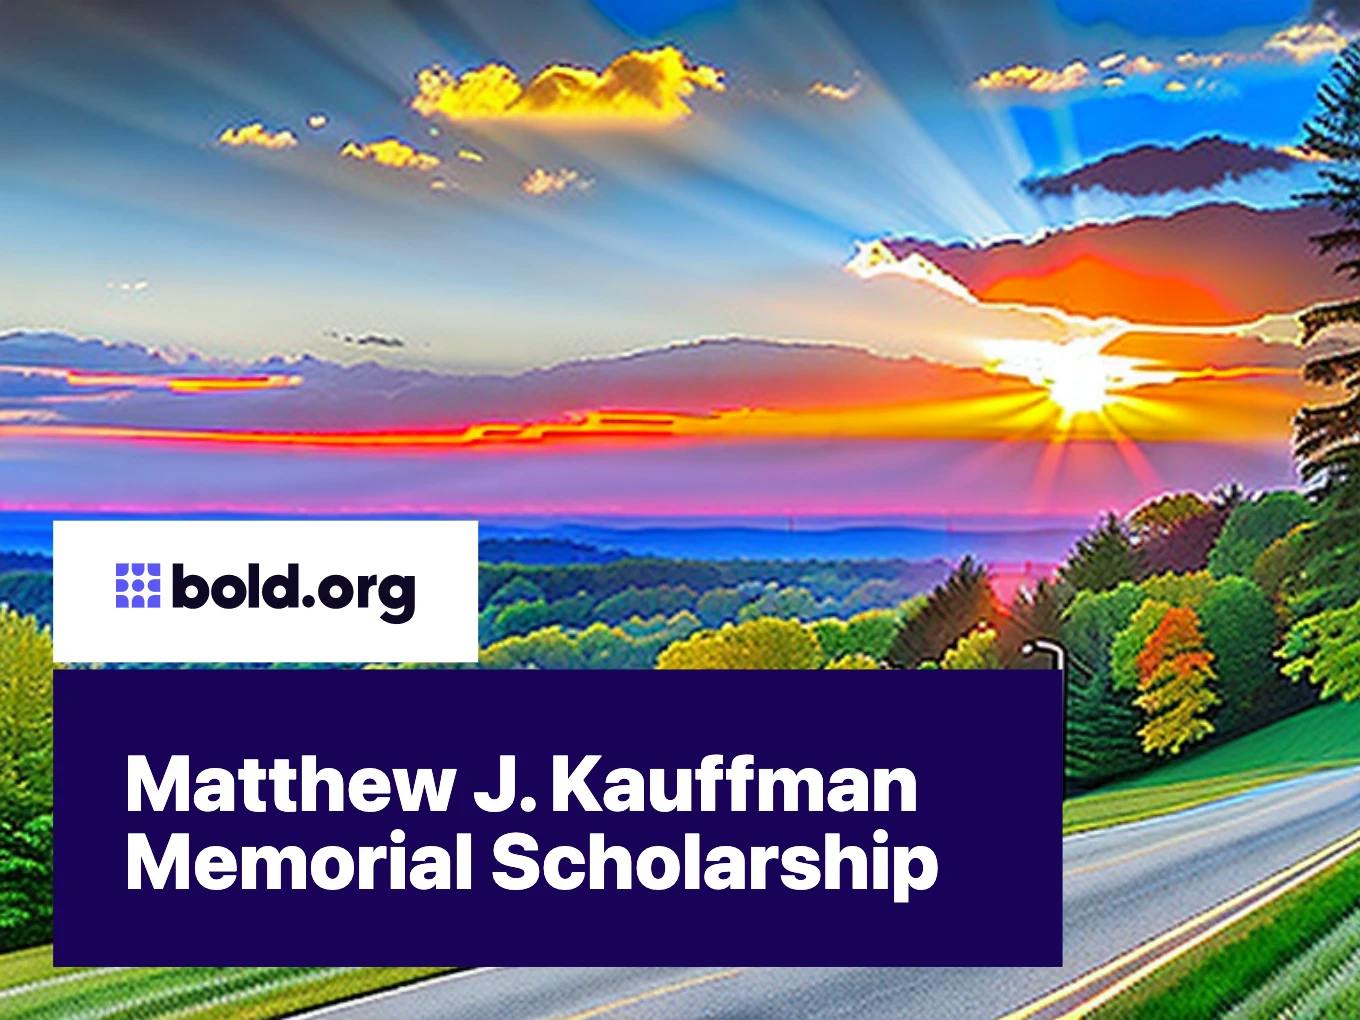 Matthew J. Kauffman Memorial Scholarship